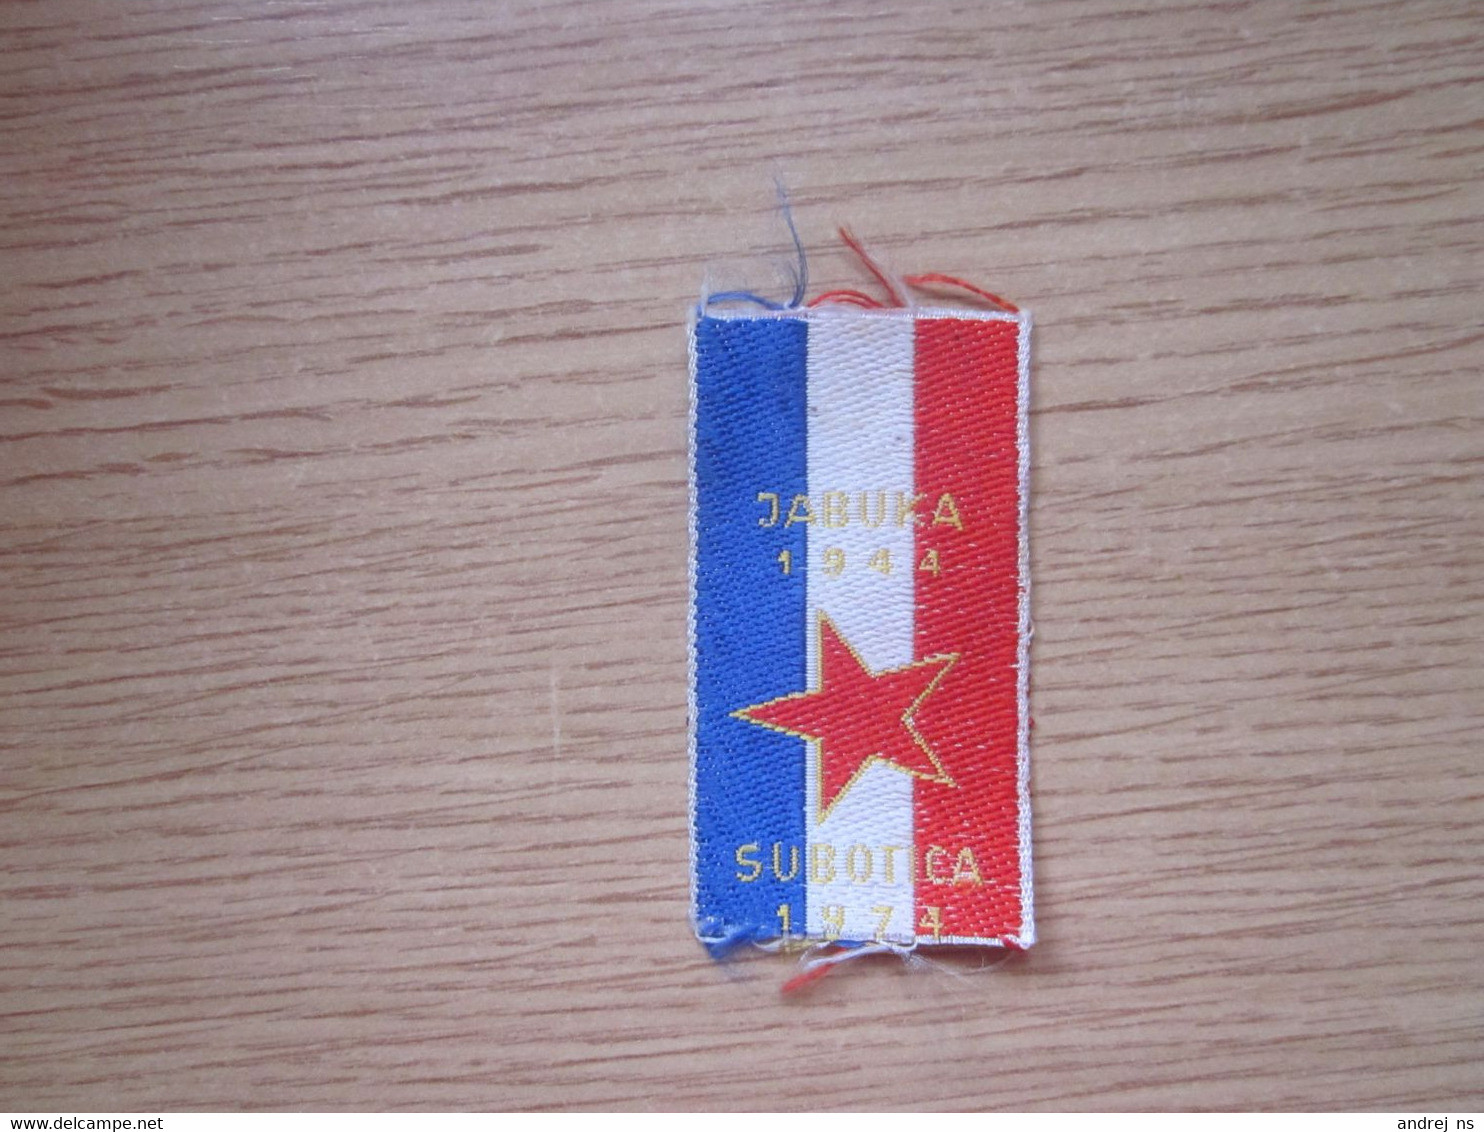 Small Flag Of Yugoslavia Jabuka 1944 Subotica 1974 3.2x5.5 Cm - Drapeaux